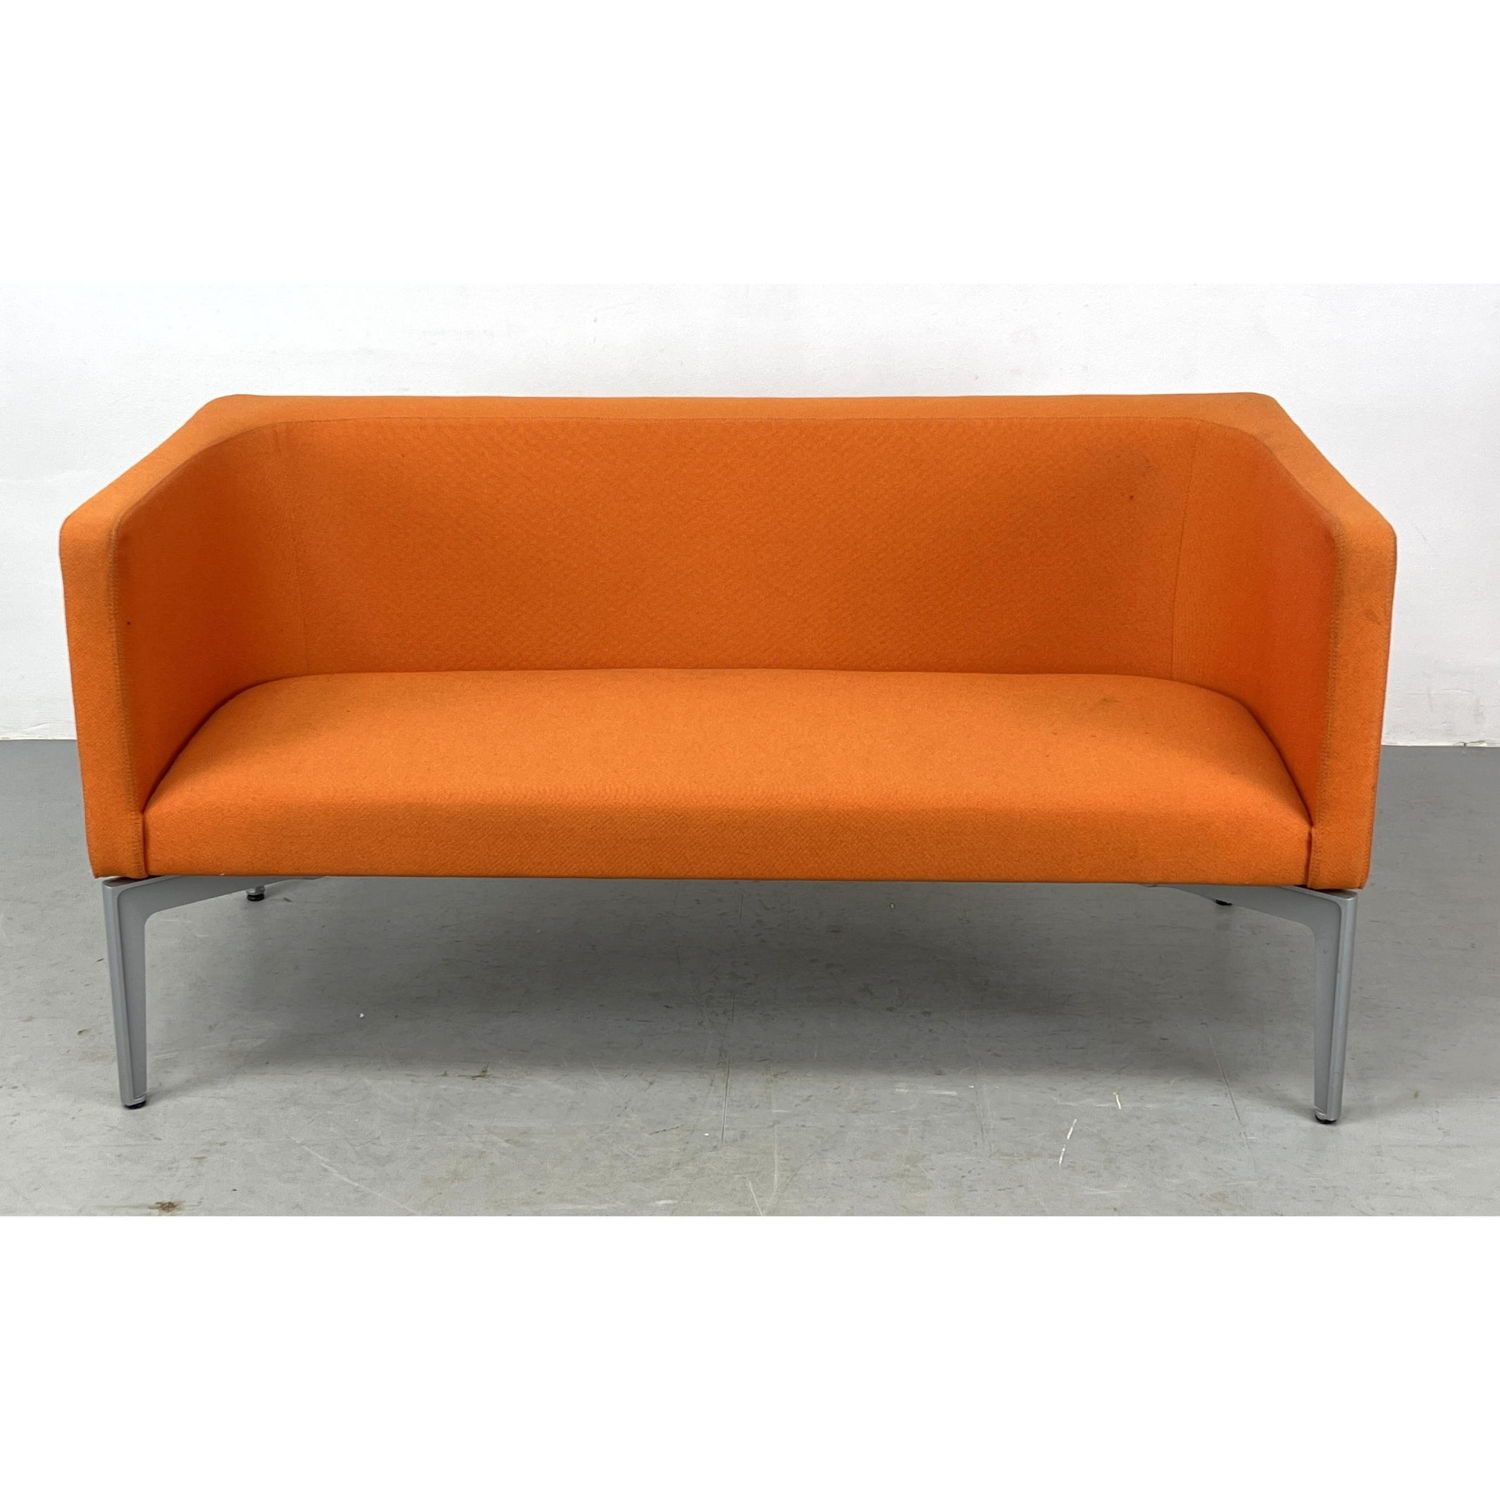 STEELCASE Orange Modernist Sofa